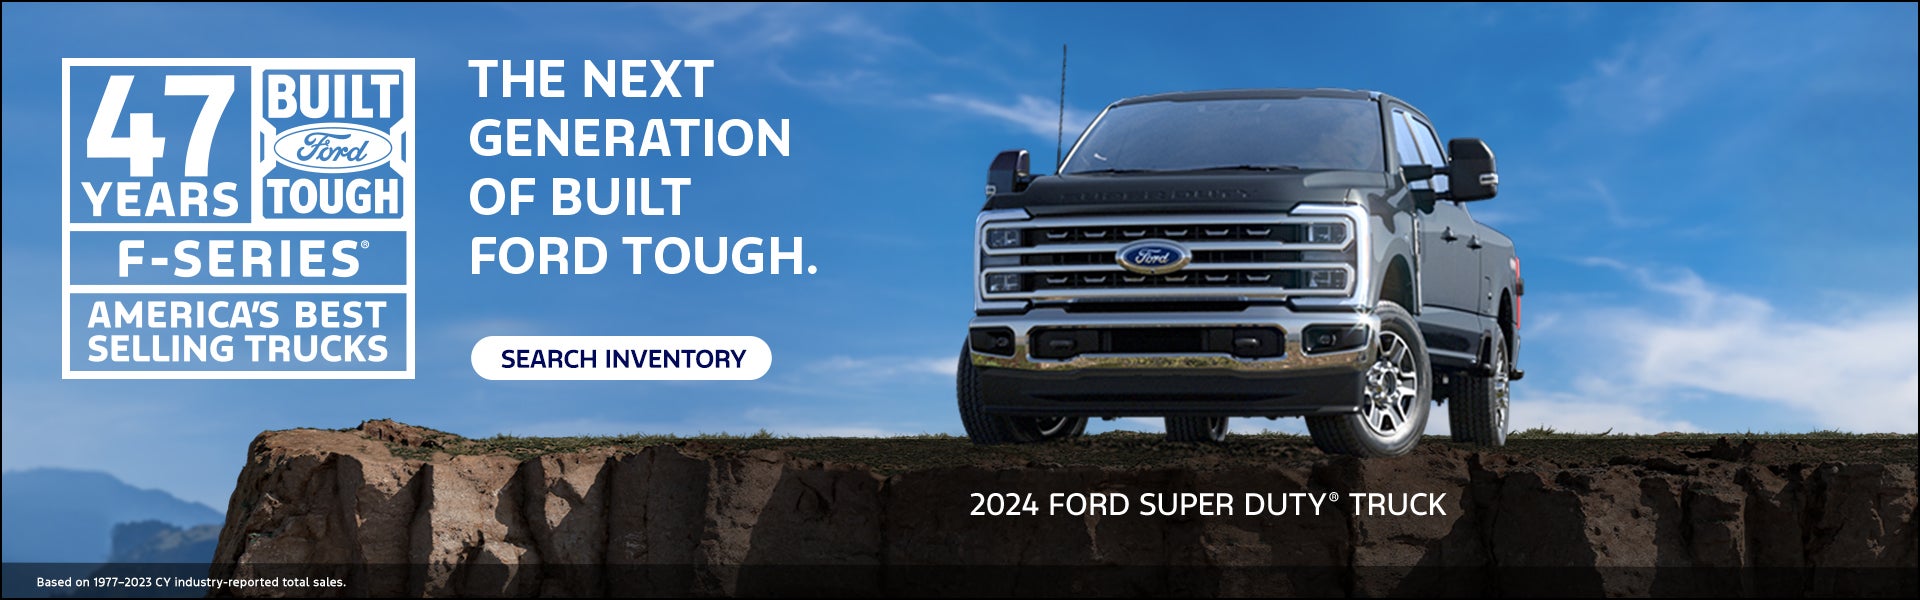 Ford Trucks America's Best Selling - Super Duty